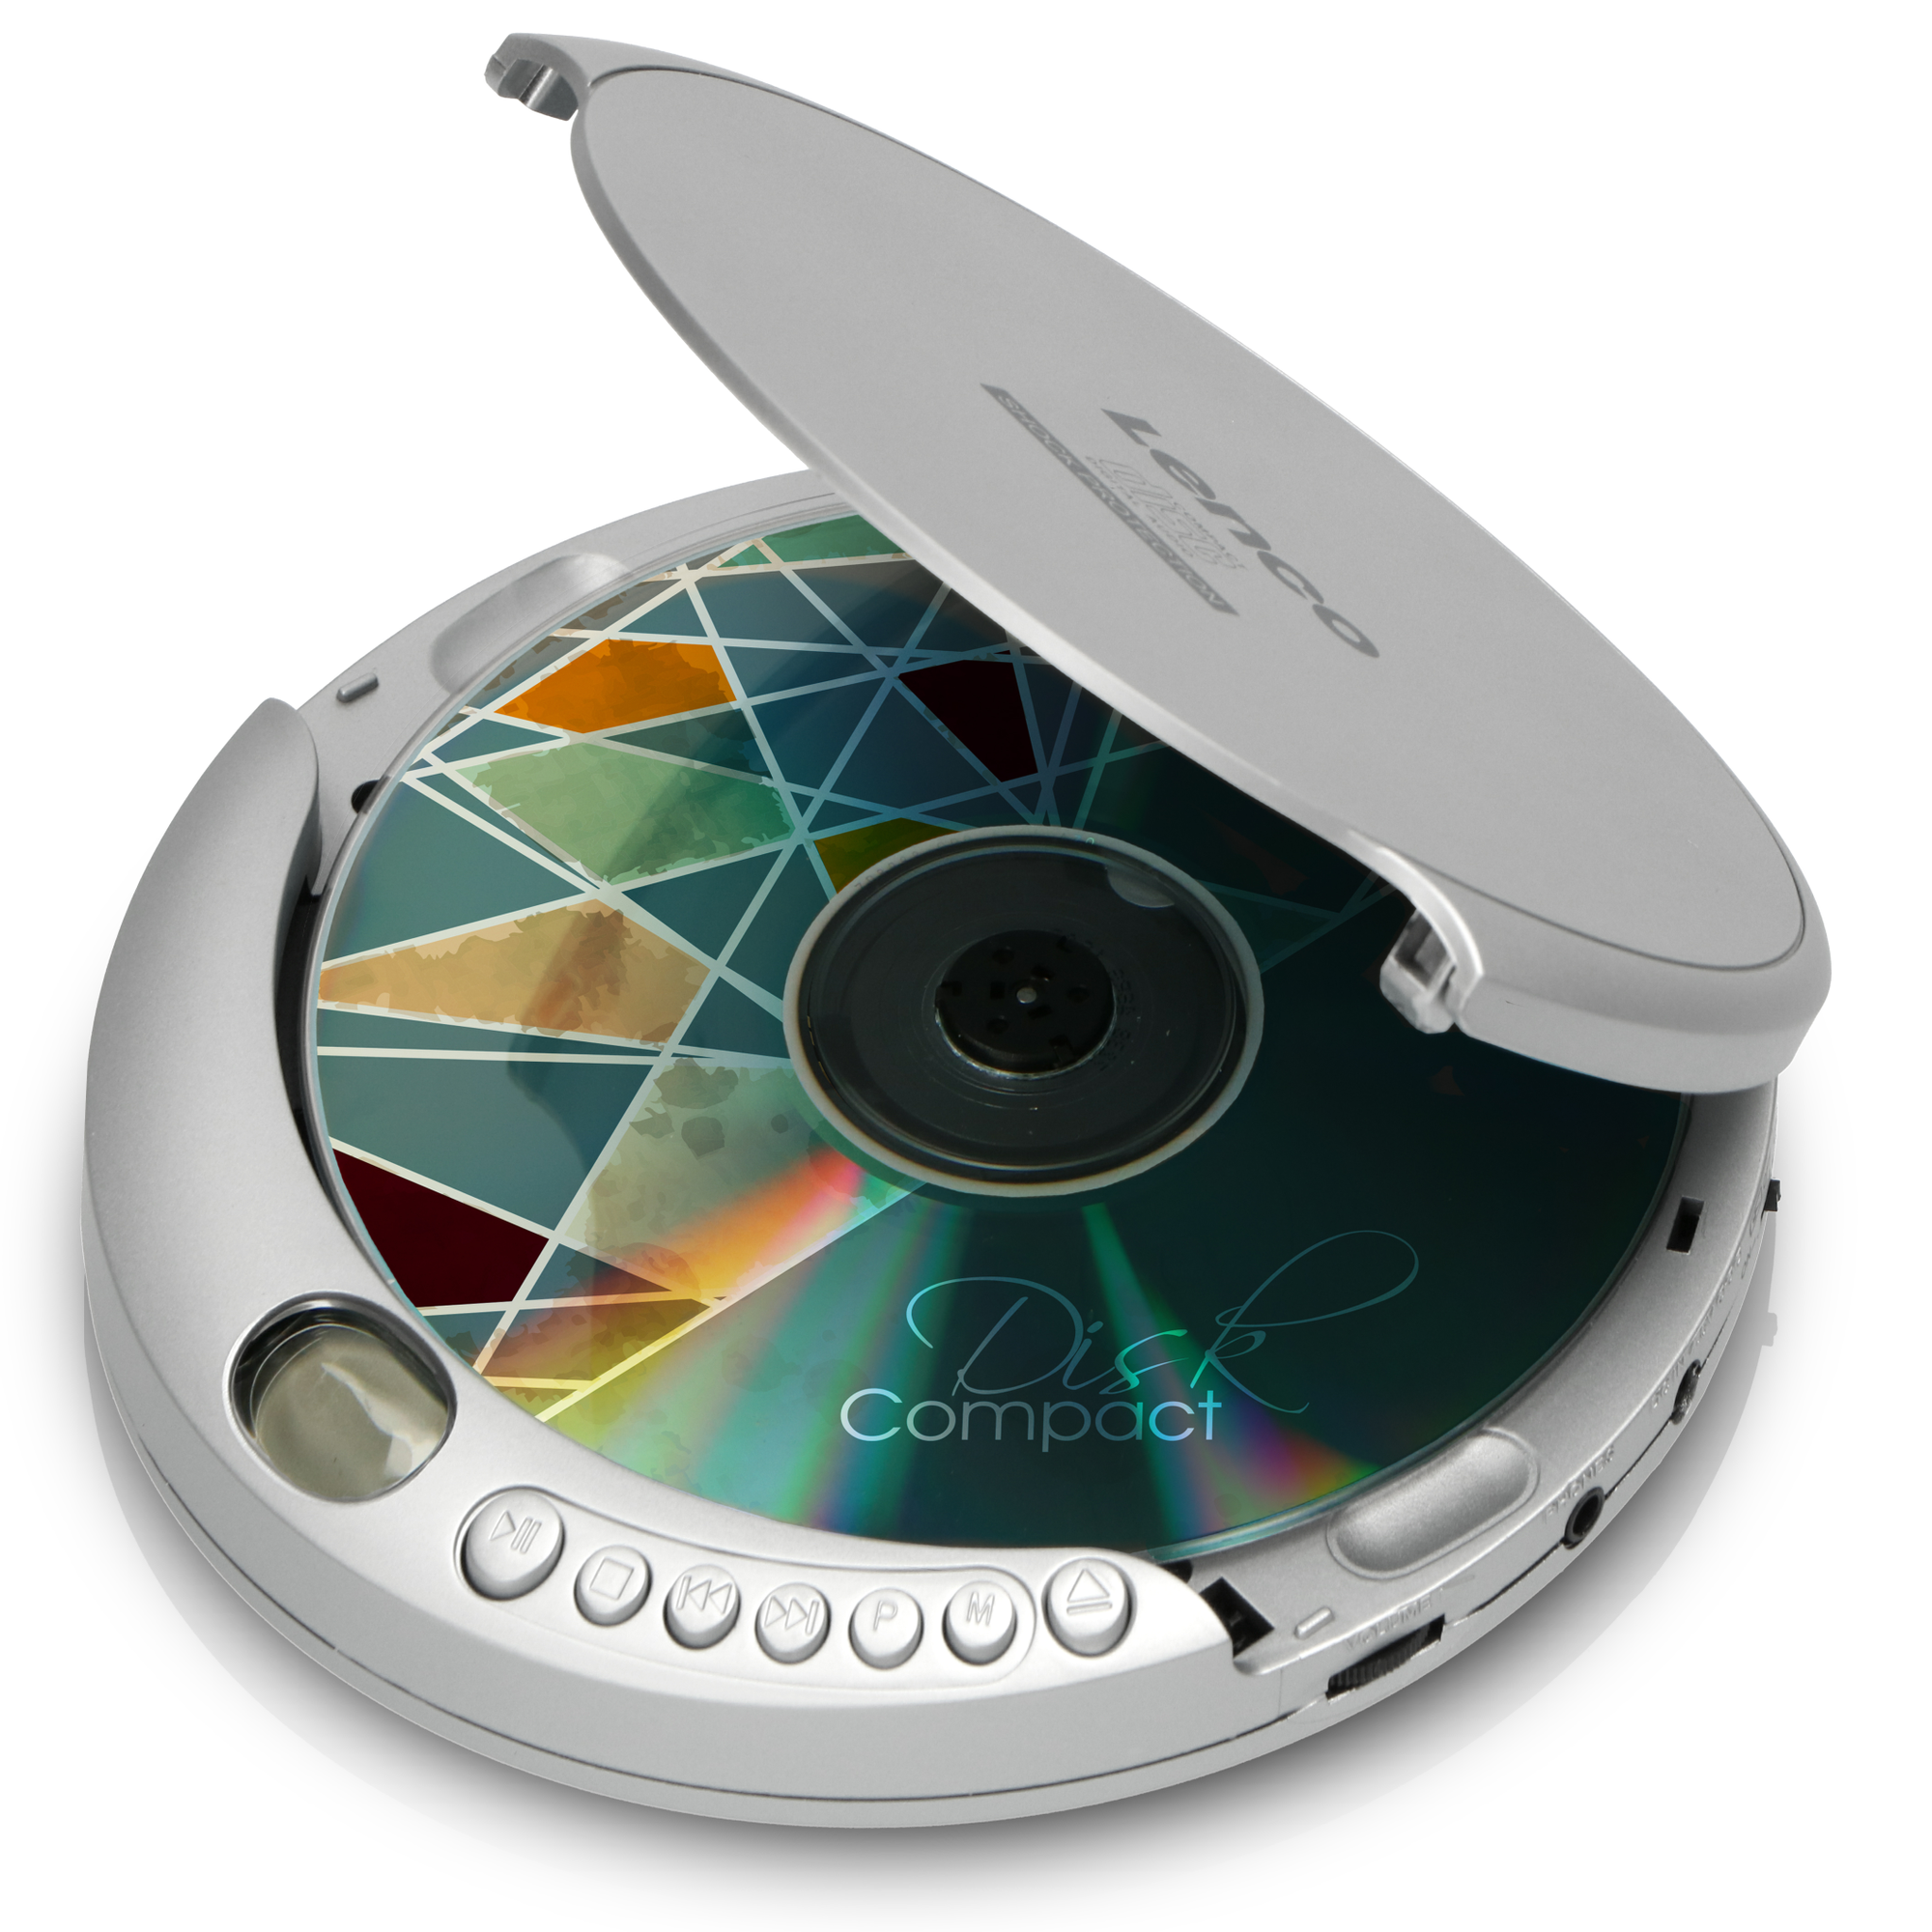 Schwarz-Grau CD-201SI+PBC-50GY CD Tragbarer Player LENCO